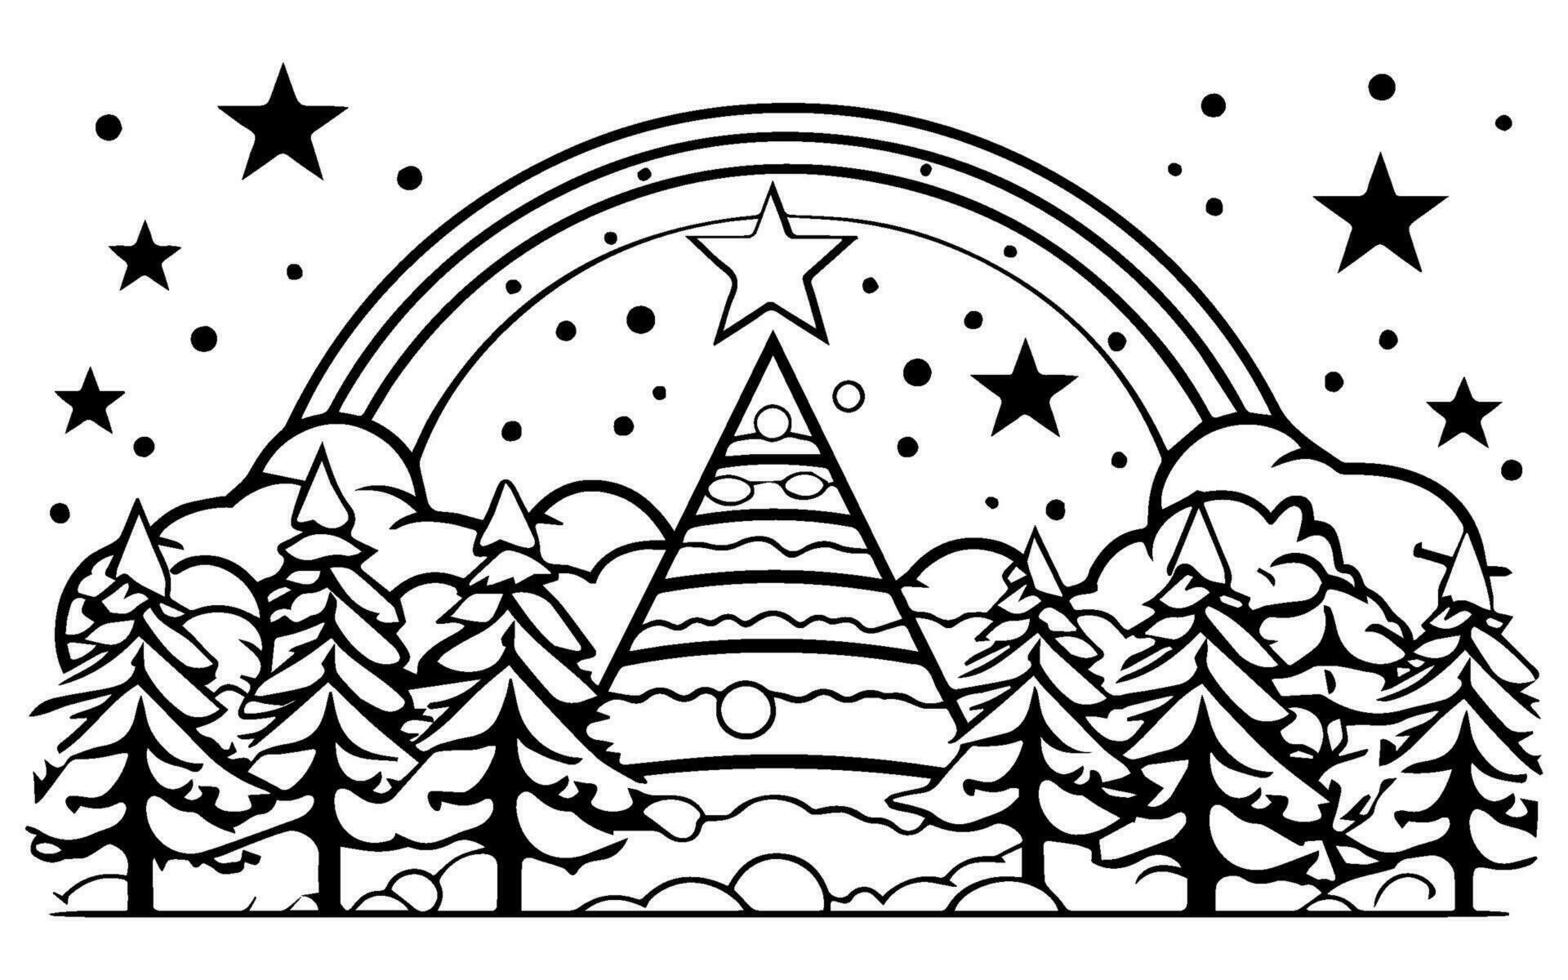 Xmas winter coloring page, kid, children, illustration, Christmas, Santa Clause. vector